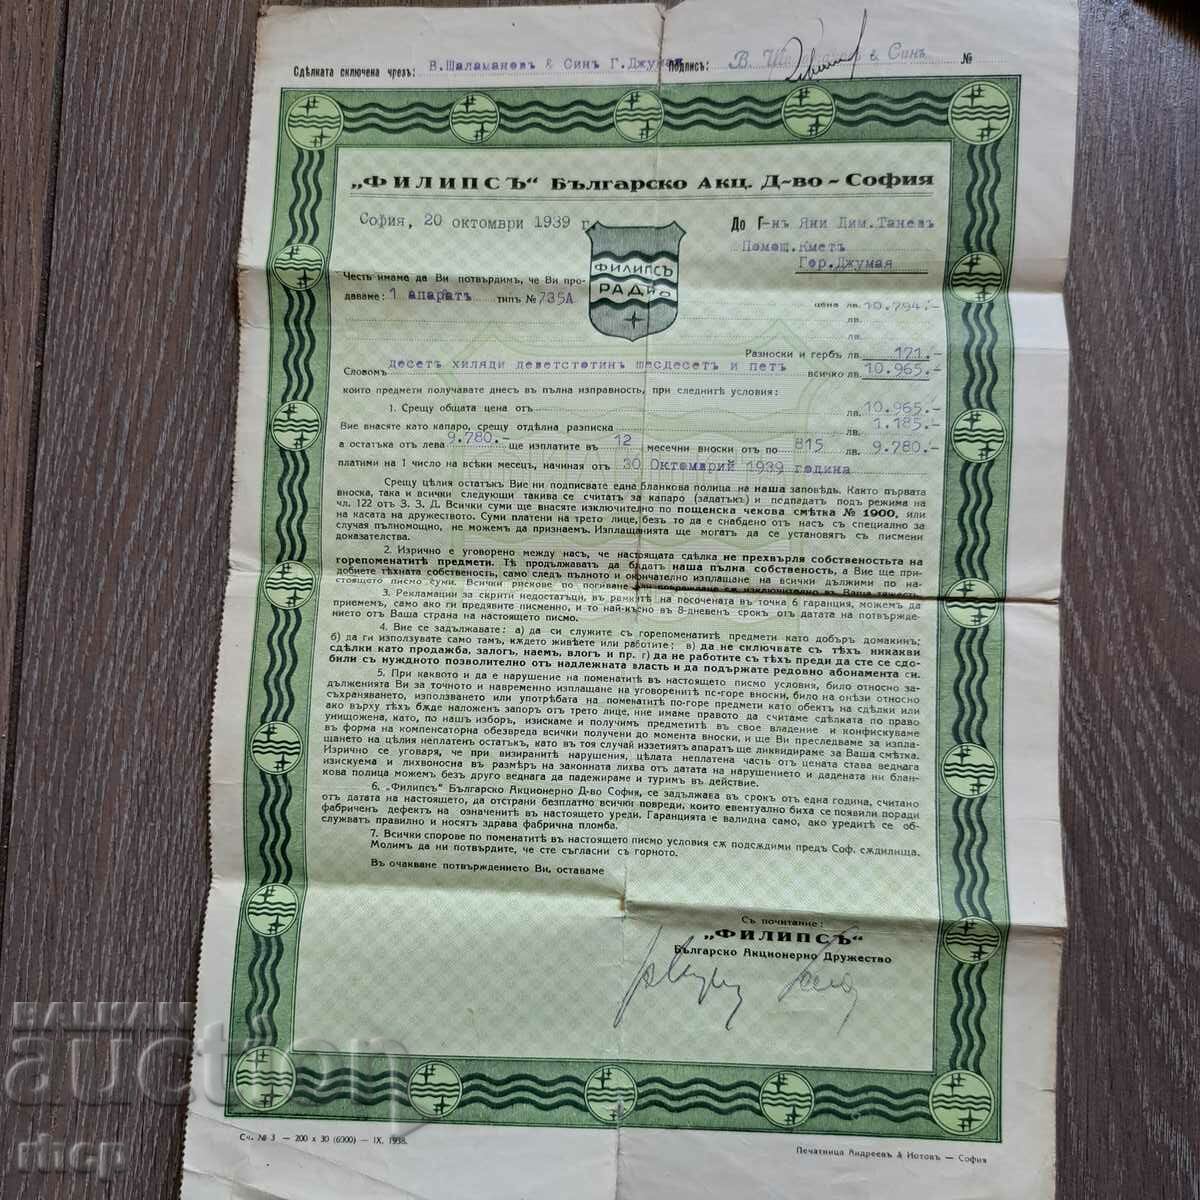 Philips radio 1939 purchase document